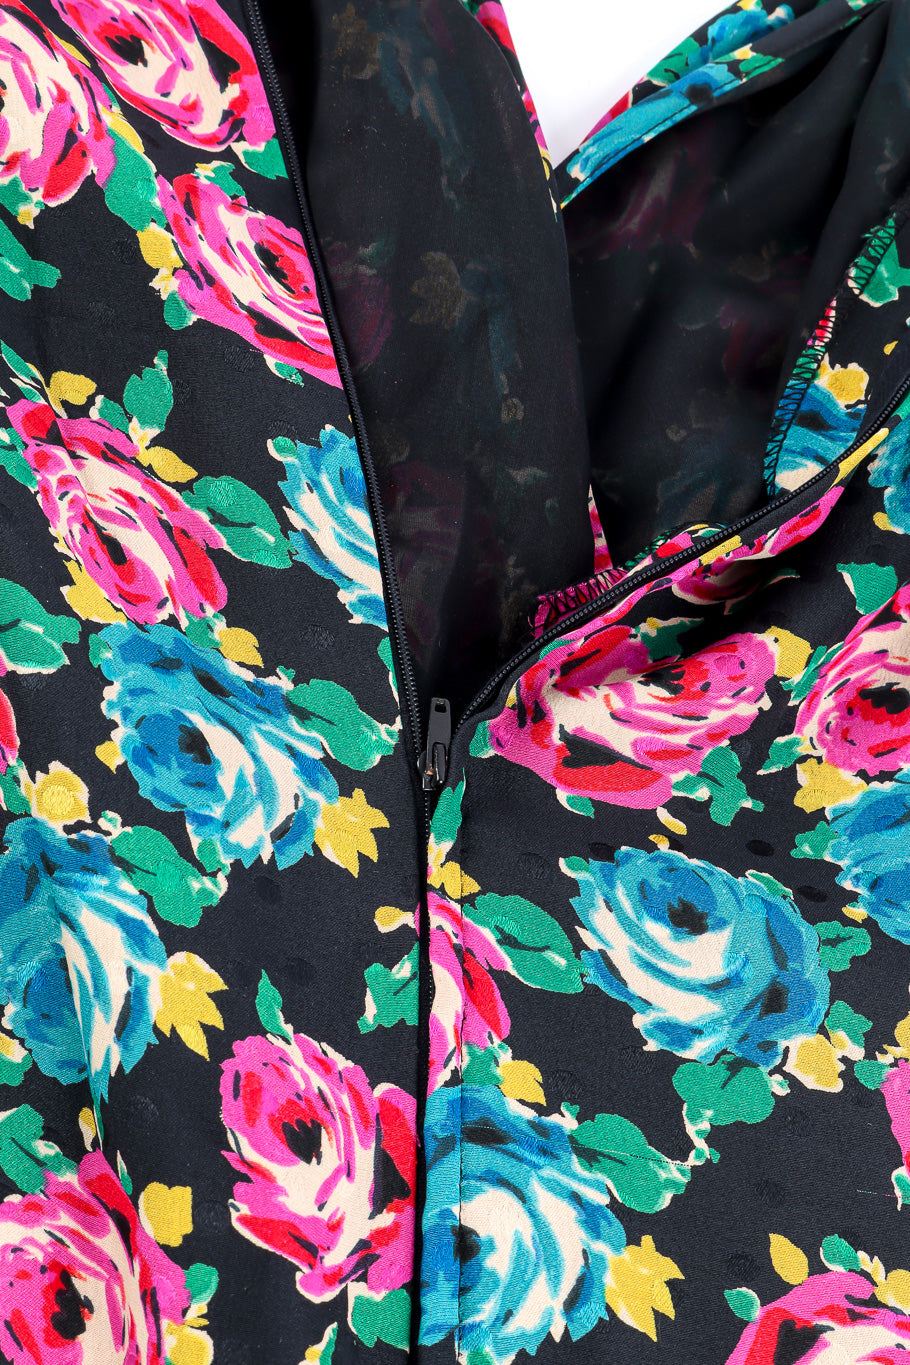 Emanuele Ungaro rose print silk dress back zipper @recessla